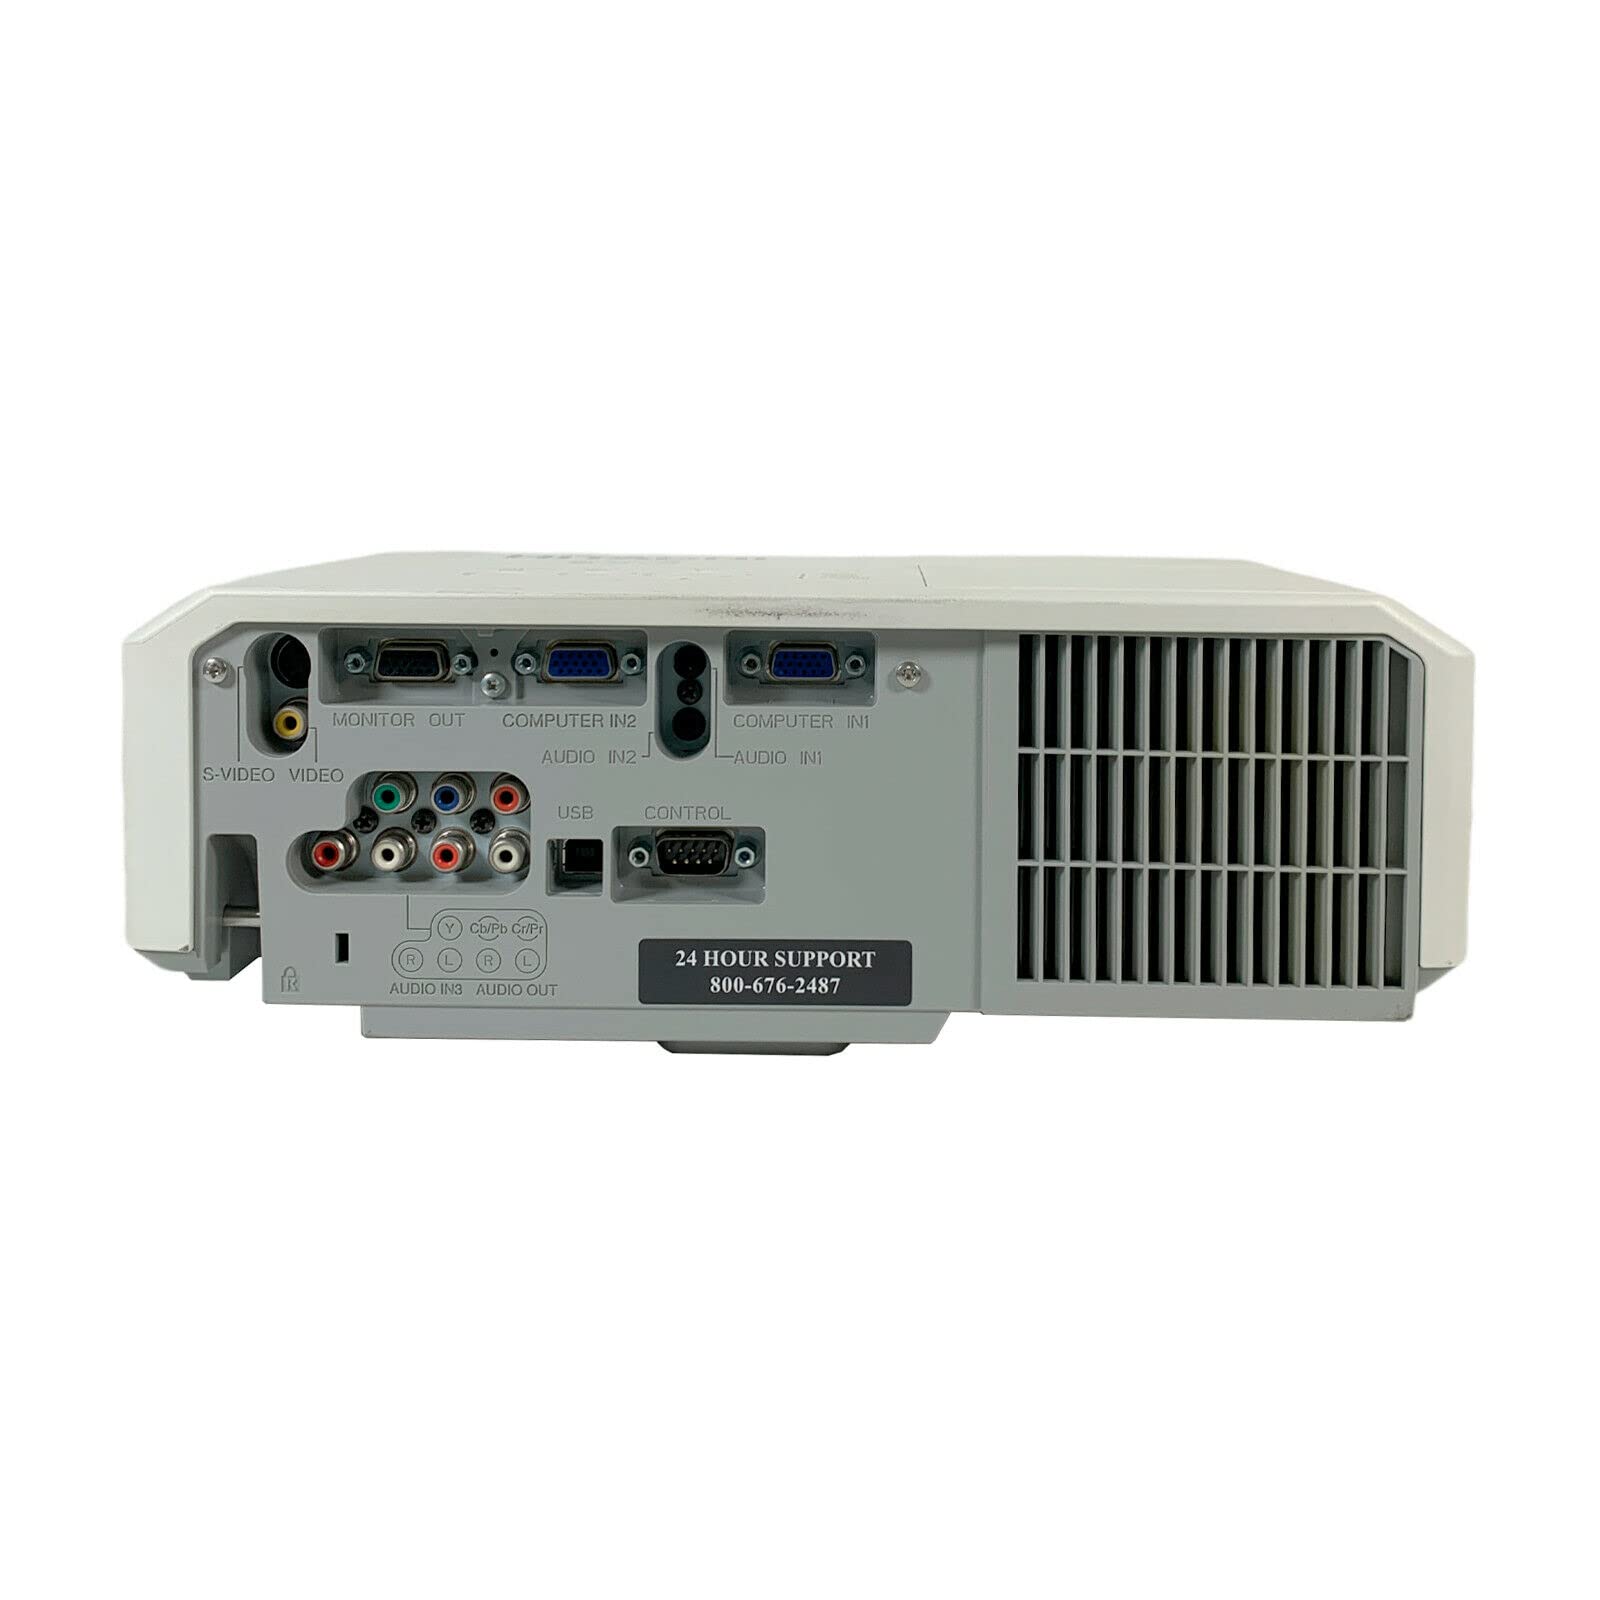 LCD Proj XGA 2000:1 3000 Lumens VGA Svid Comp 7.9LBS 120V